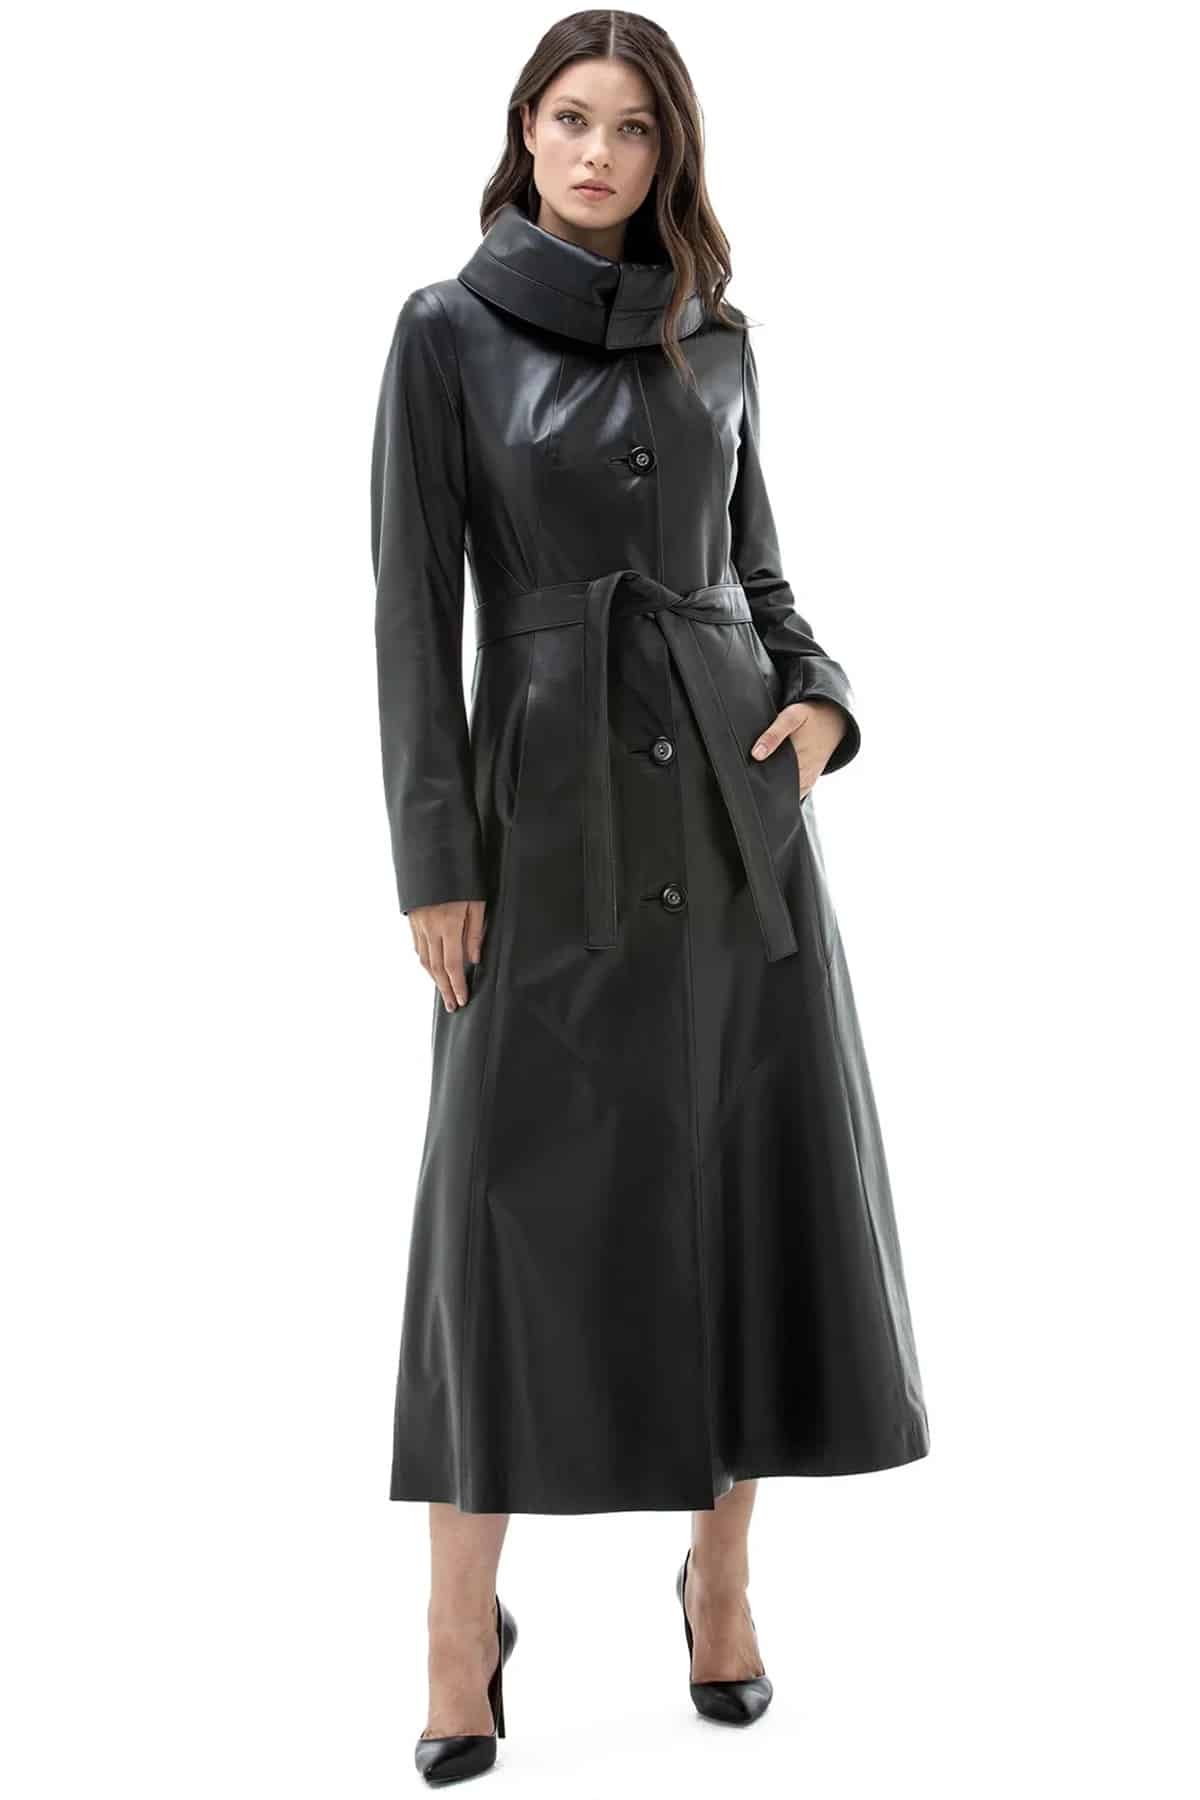 Alaska Women's 100 % Real Black Leather Classic Long Coat